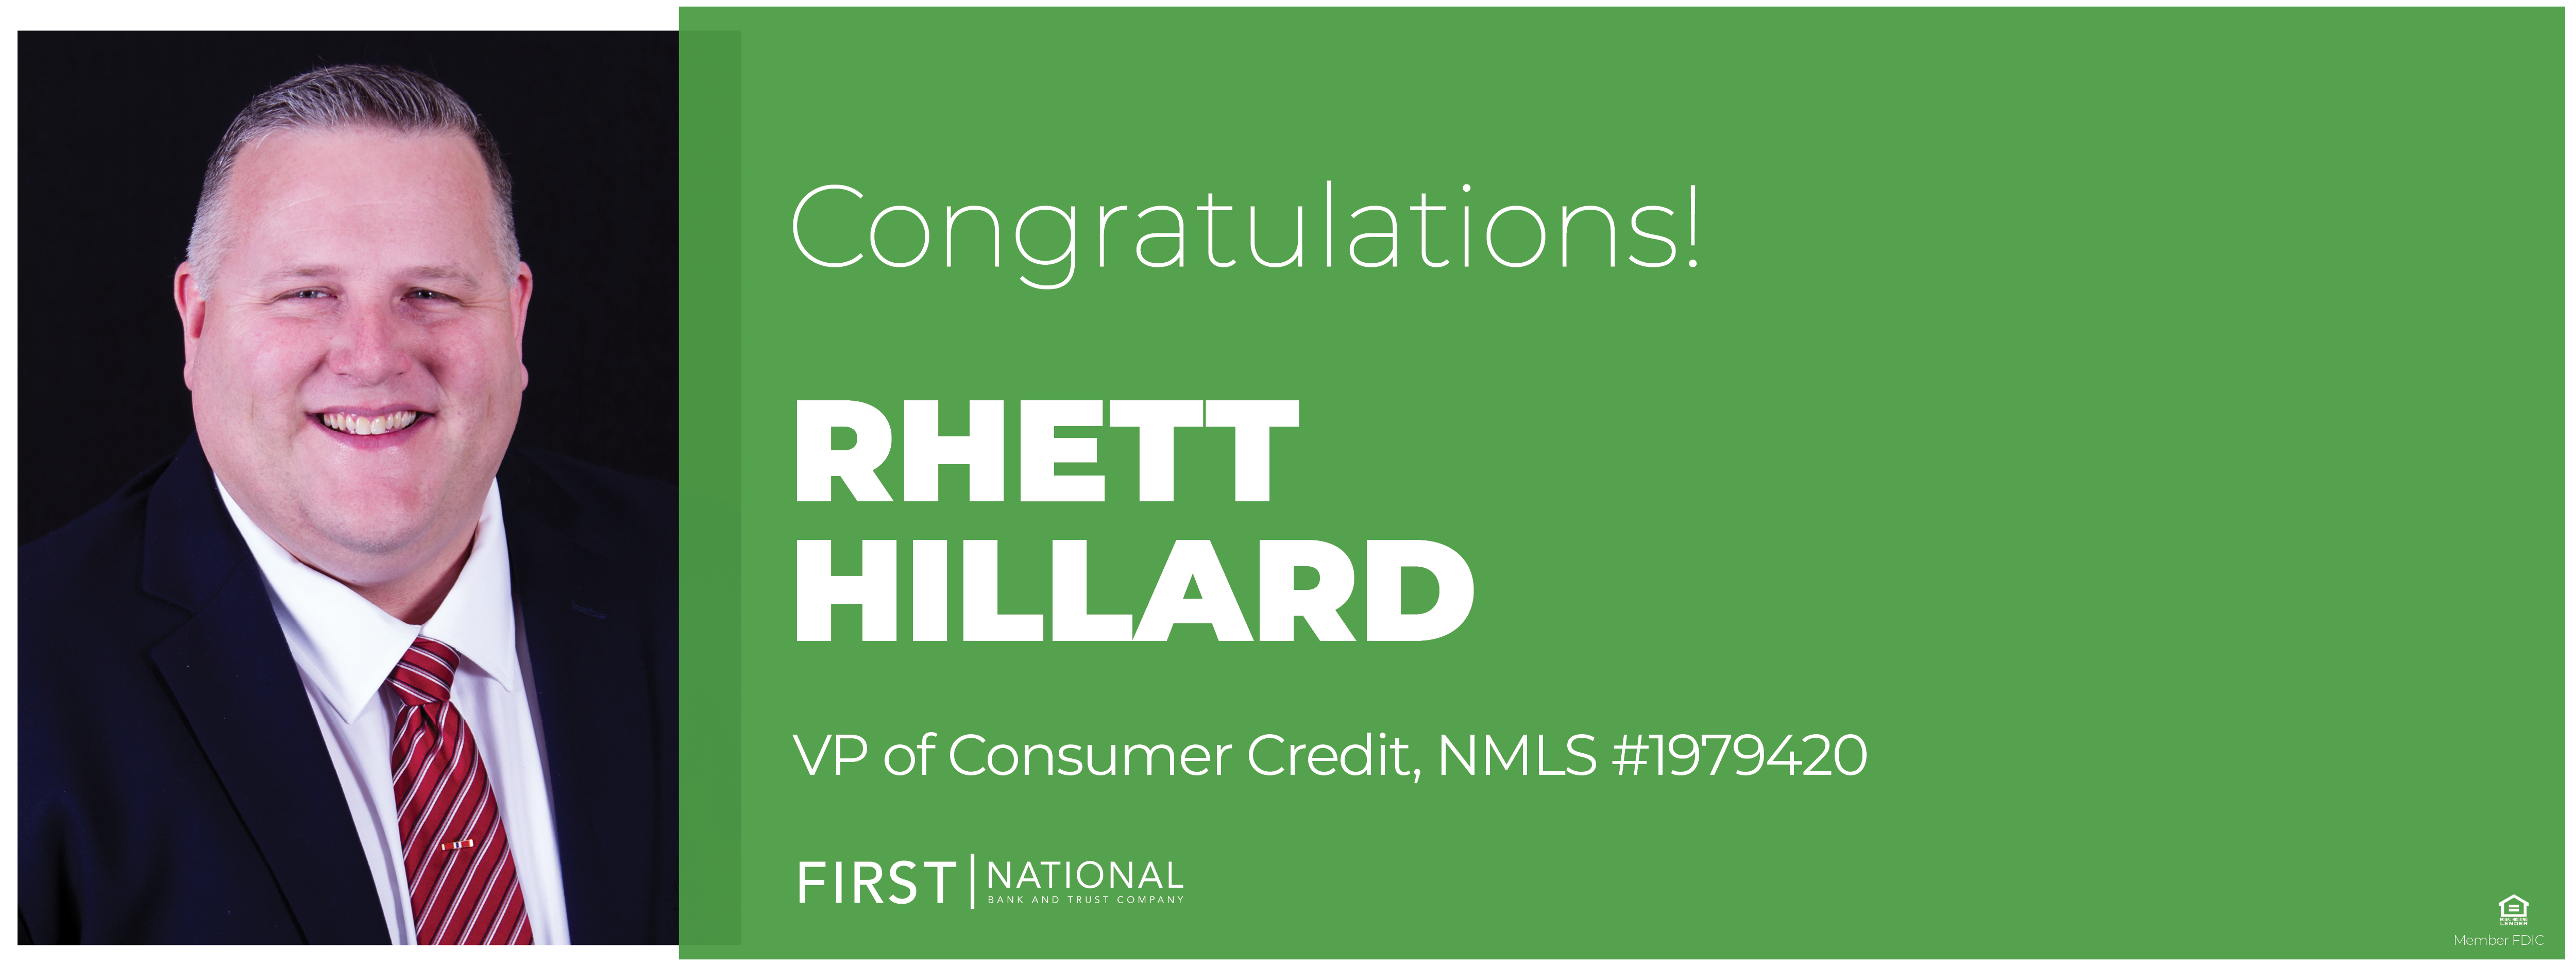 Congratulations Rhett Hillard